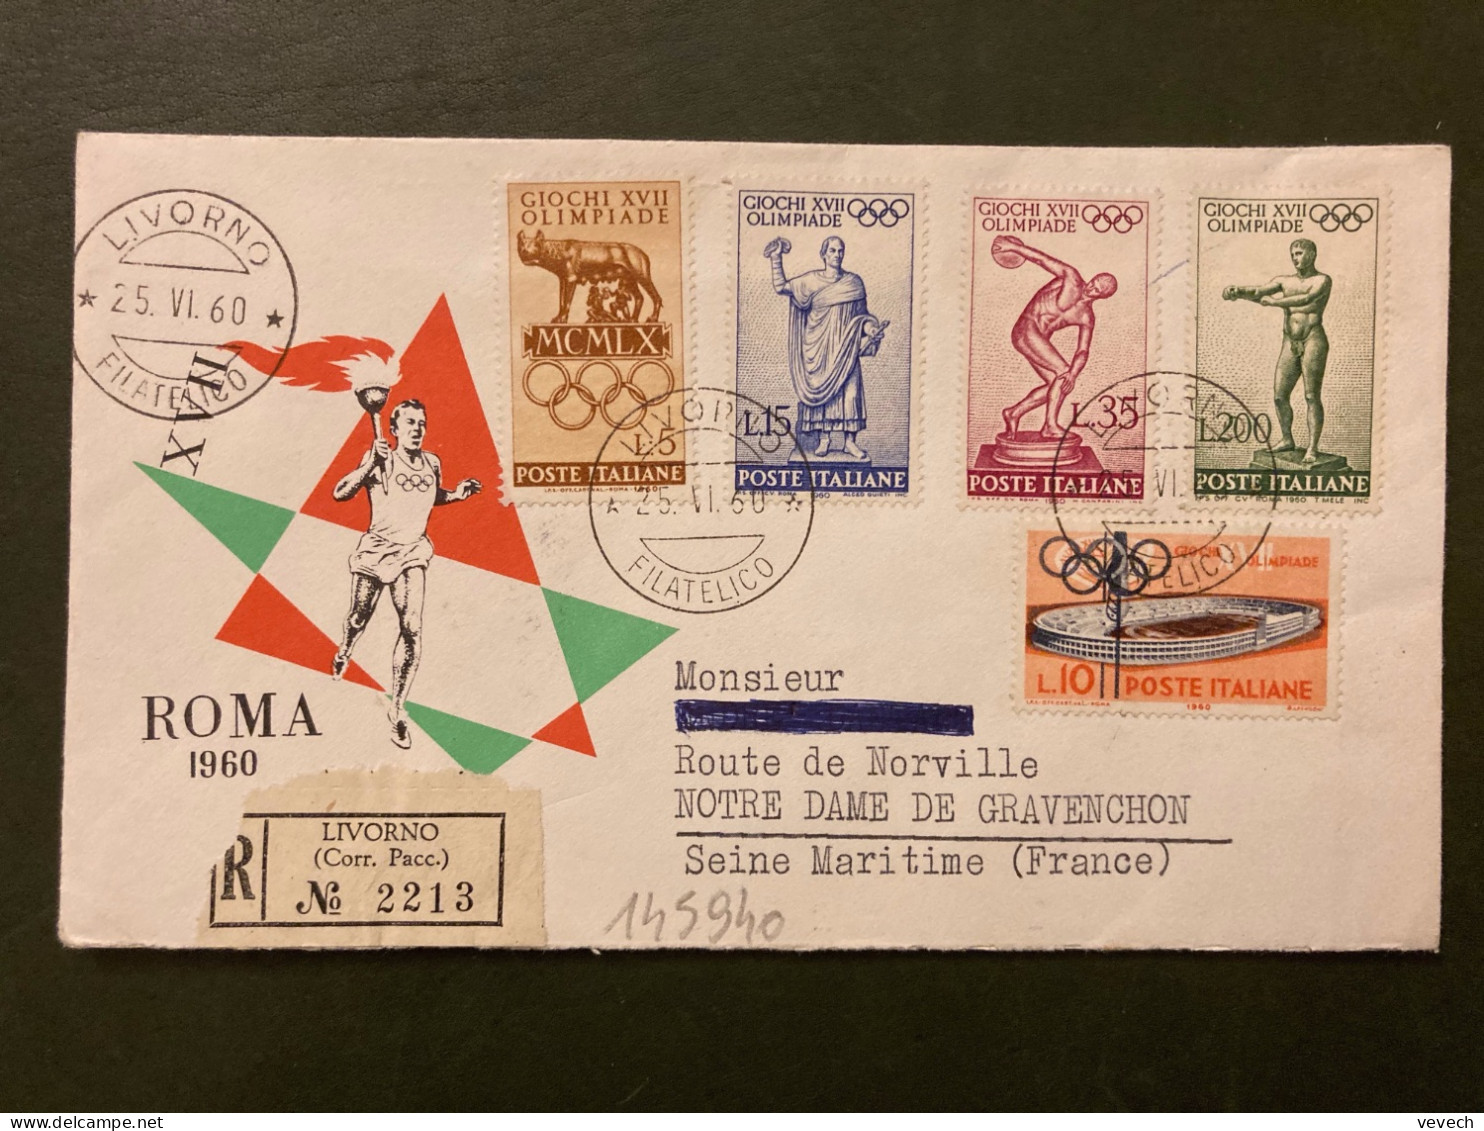 LR ROMA JO XVII OLIMPIADE TP L5 + L15 + L35 + L200 + L10 OBL.25 VI 60 LIVORNO - Summer 1960: Rome